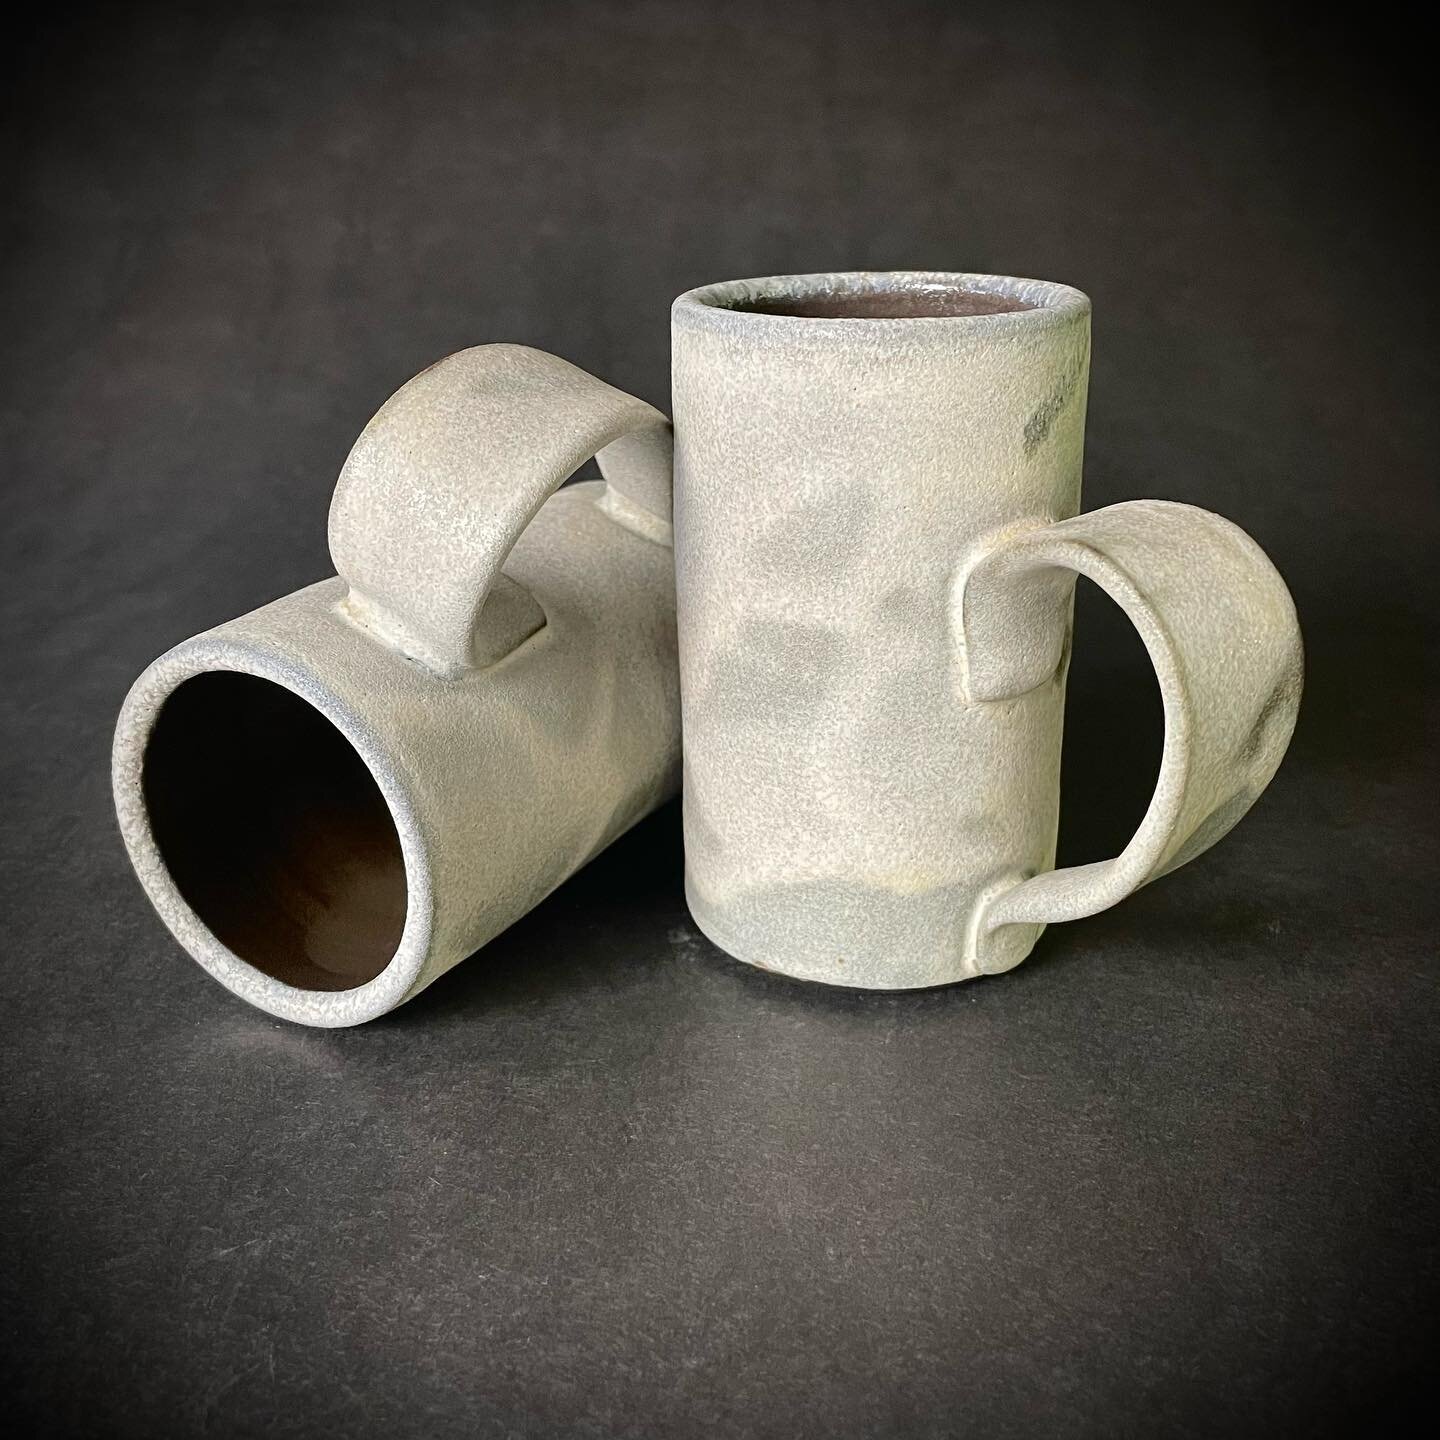 &hellip; a few more from the fire&hellip;

#texture #glaze #smallbatch #brownbear #clay #kentuckymudworks #wheelthrown #mug #mugs #pottery #functionalpottery #handcrafted #davidbrucestudio